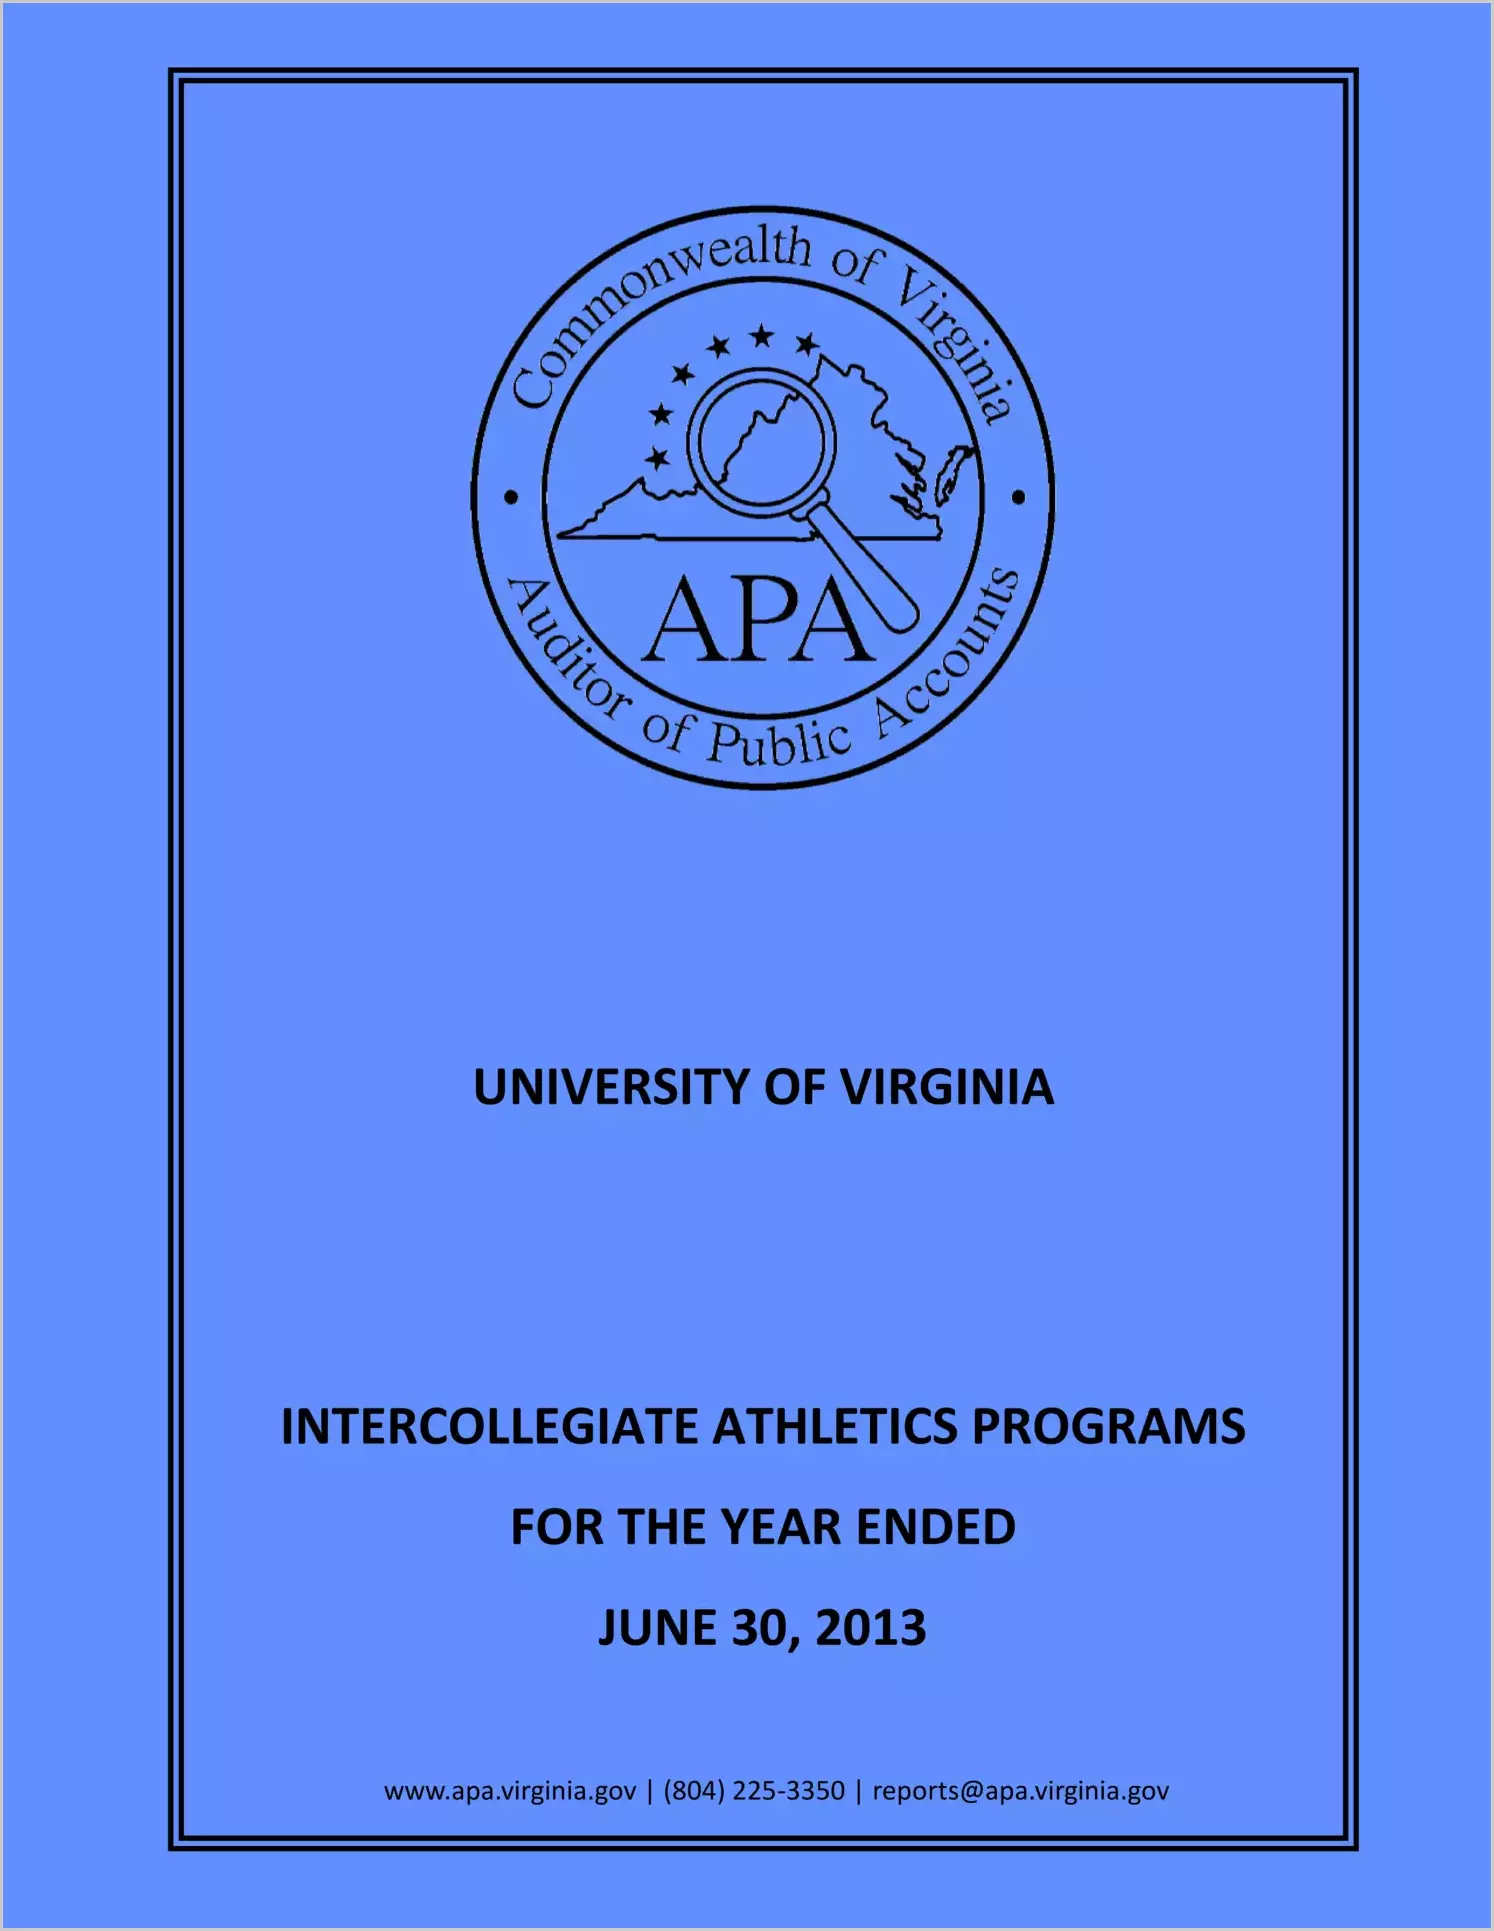 University of Virginia Intercollegiate Athletics Programs for the year ended June 30, 2013